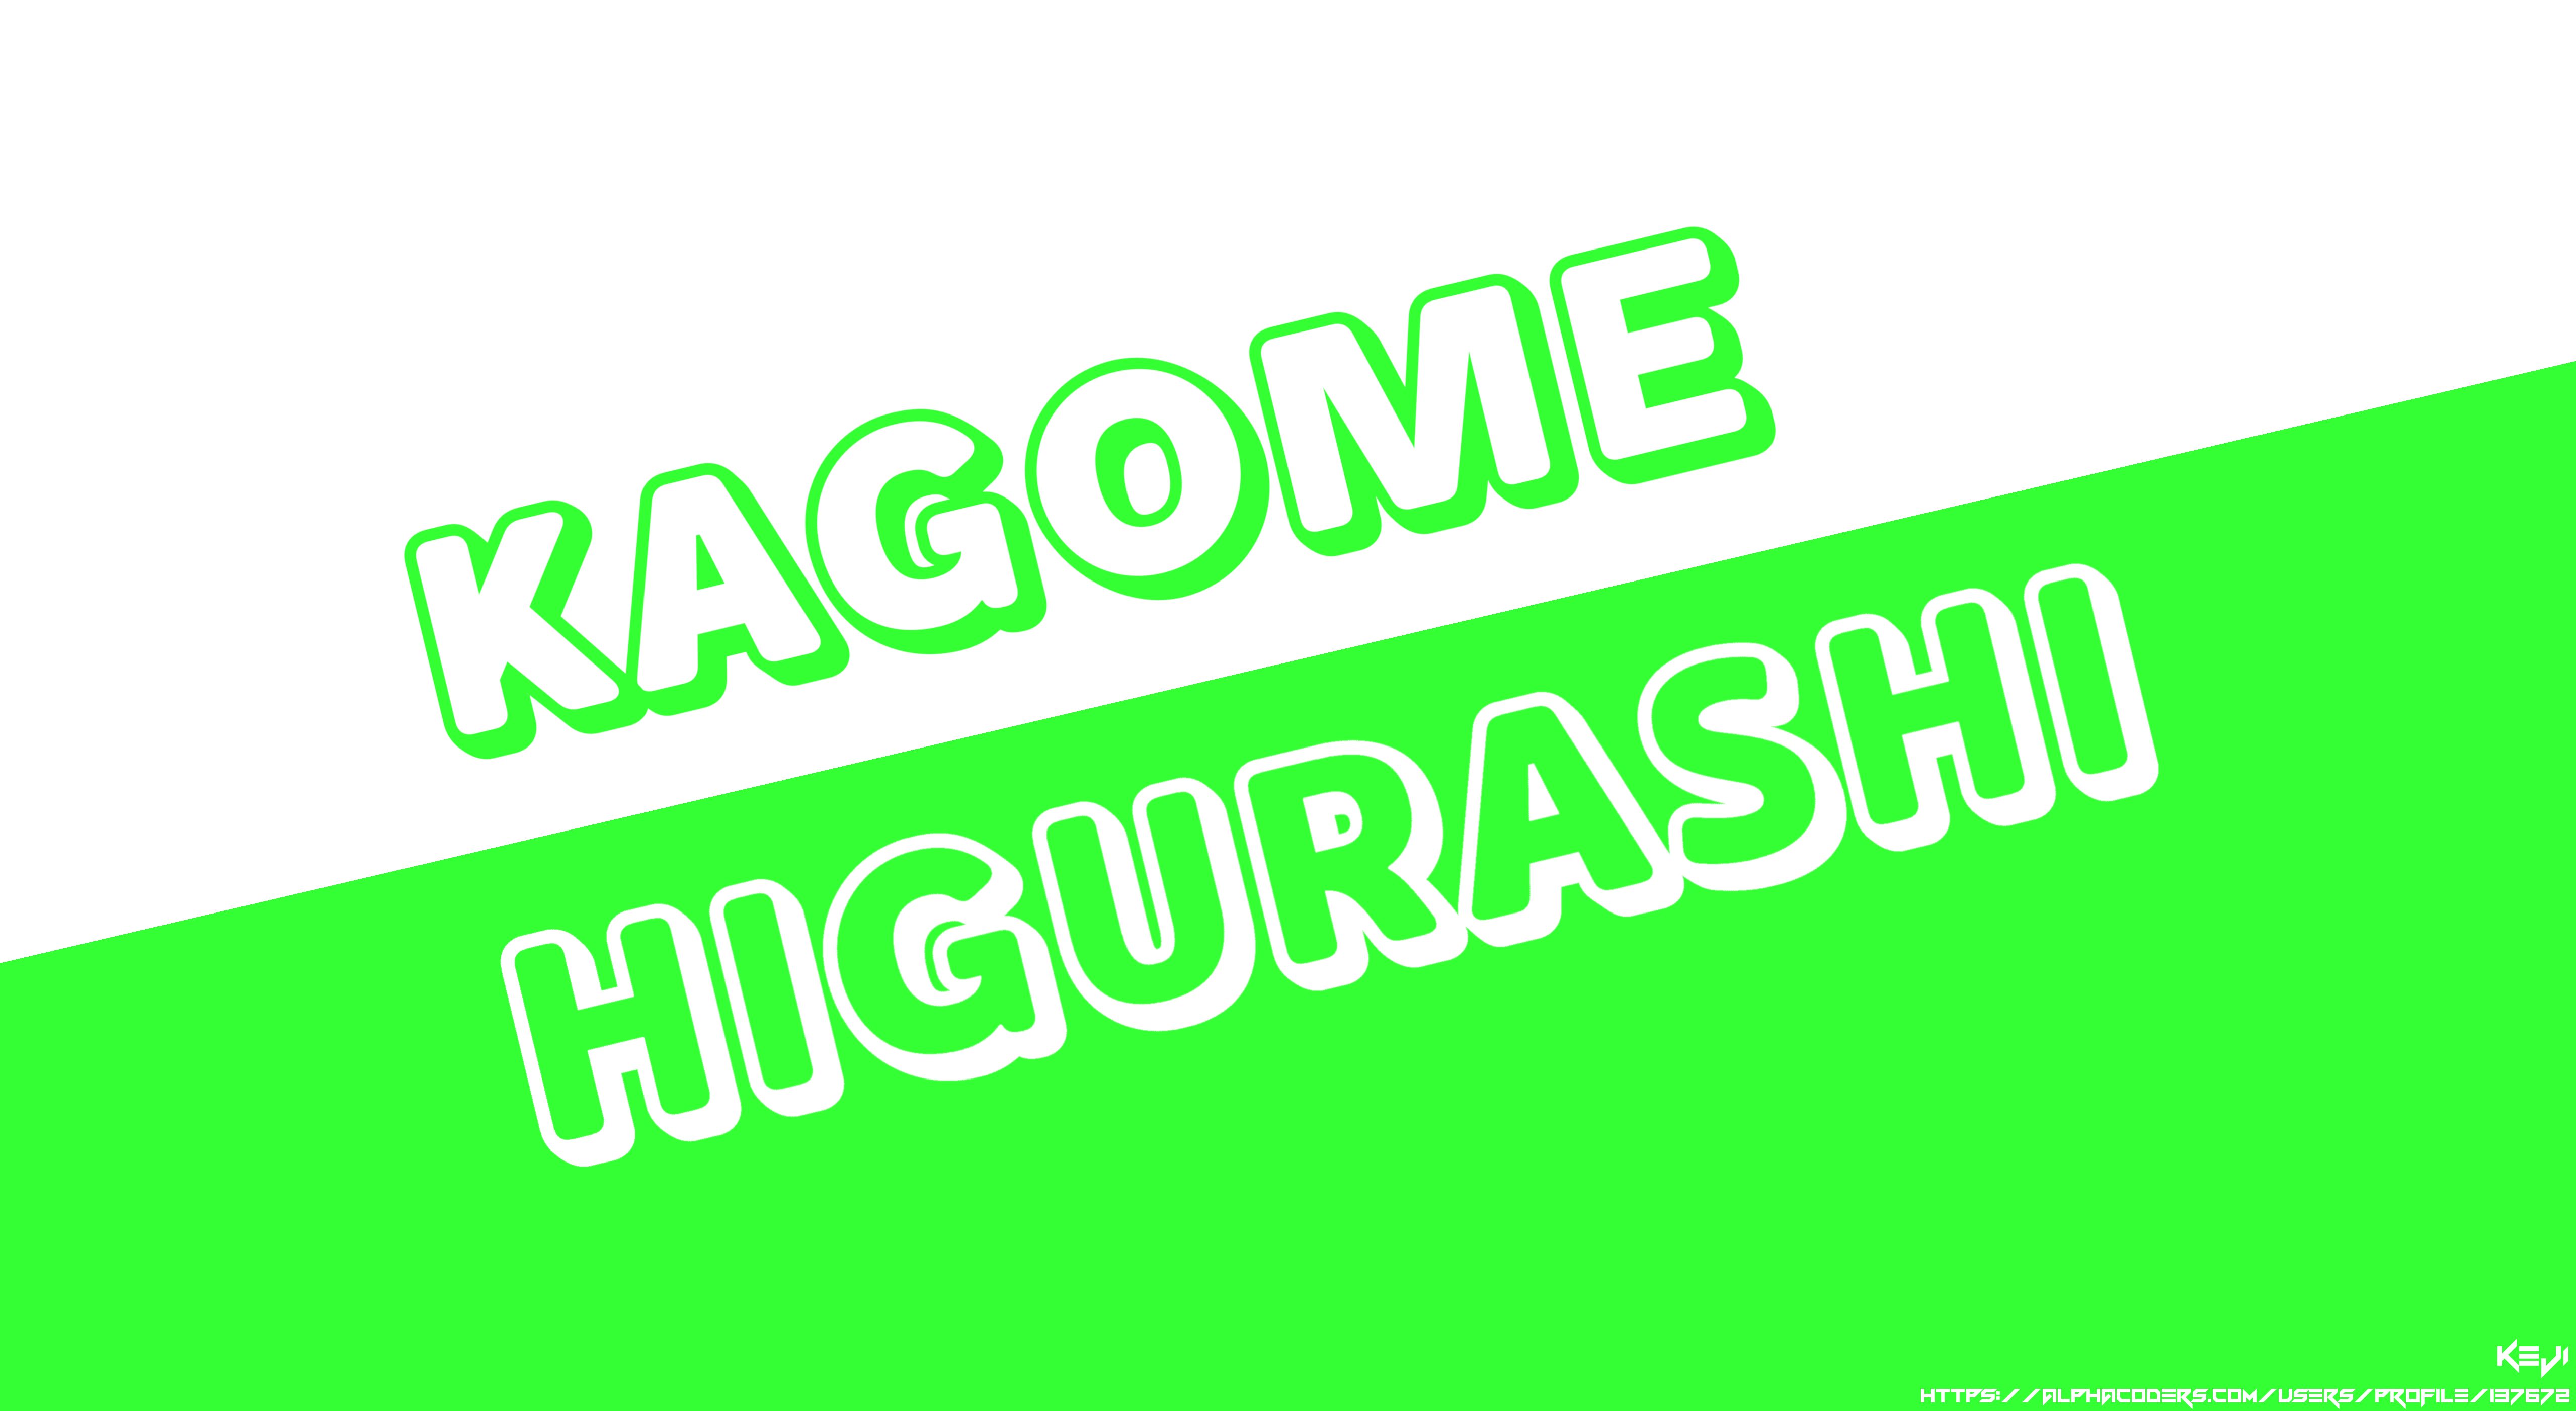 906065 Fondos de pantalla e Kagome Higurashi imágenes en el escritorio. Descarga protectores de pantalla  en tu PC gratis